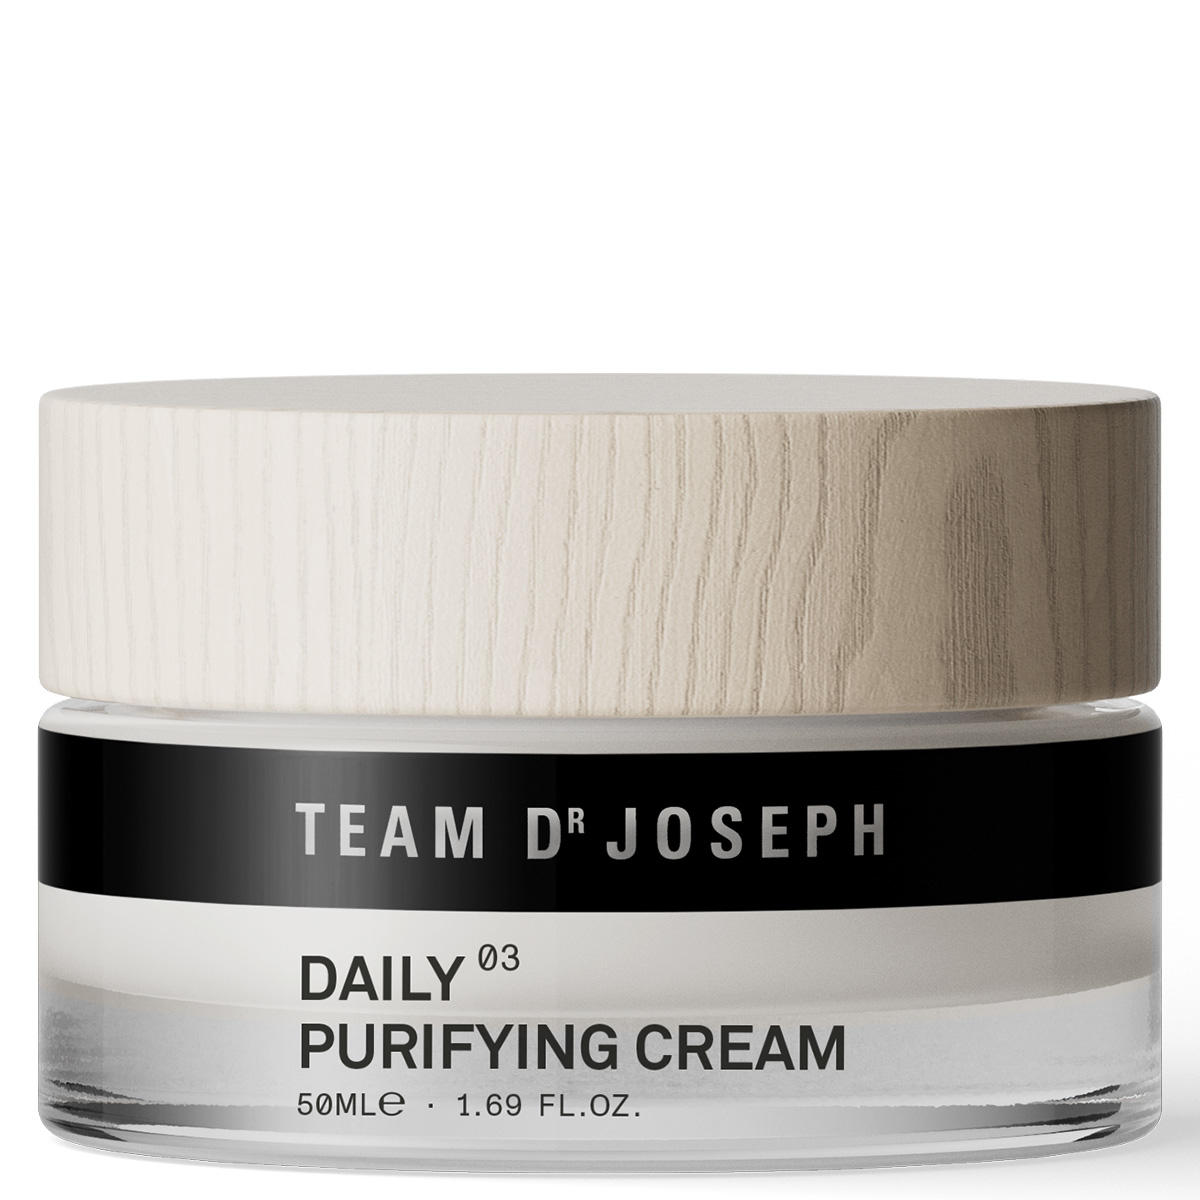 TEAM DR JOSEPH Daily Purifying Cream 50 ml - 1